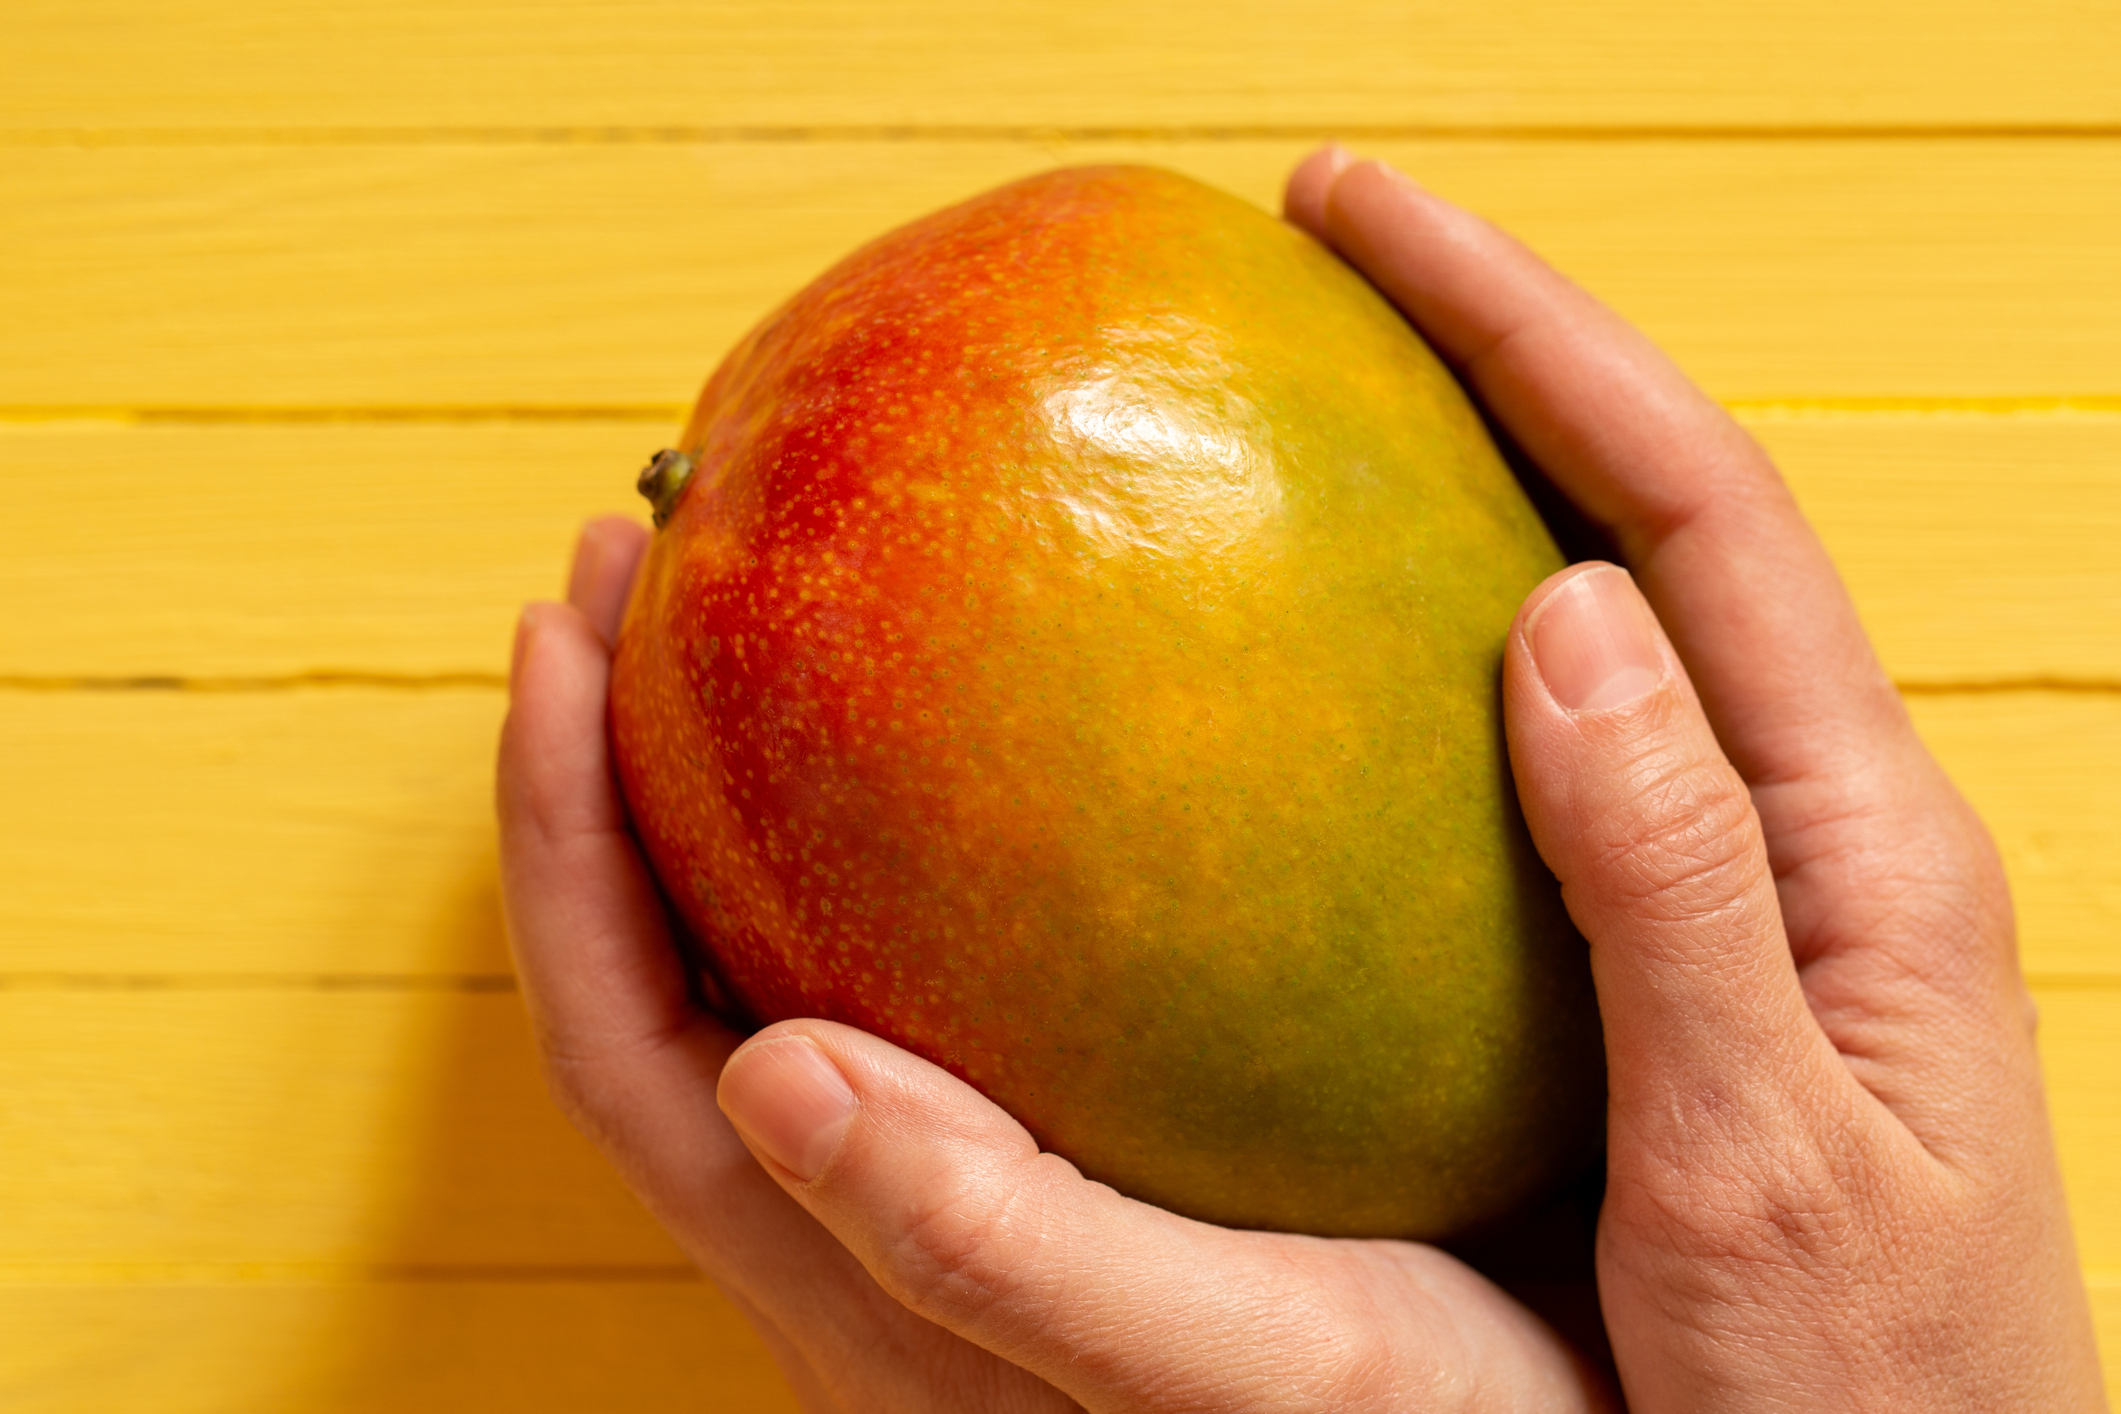 Know Your Produce Commodity  Mango Market & Industry Summary